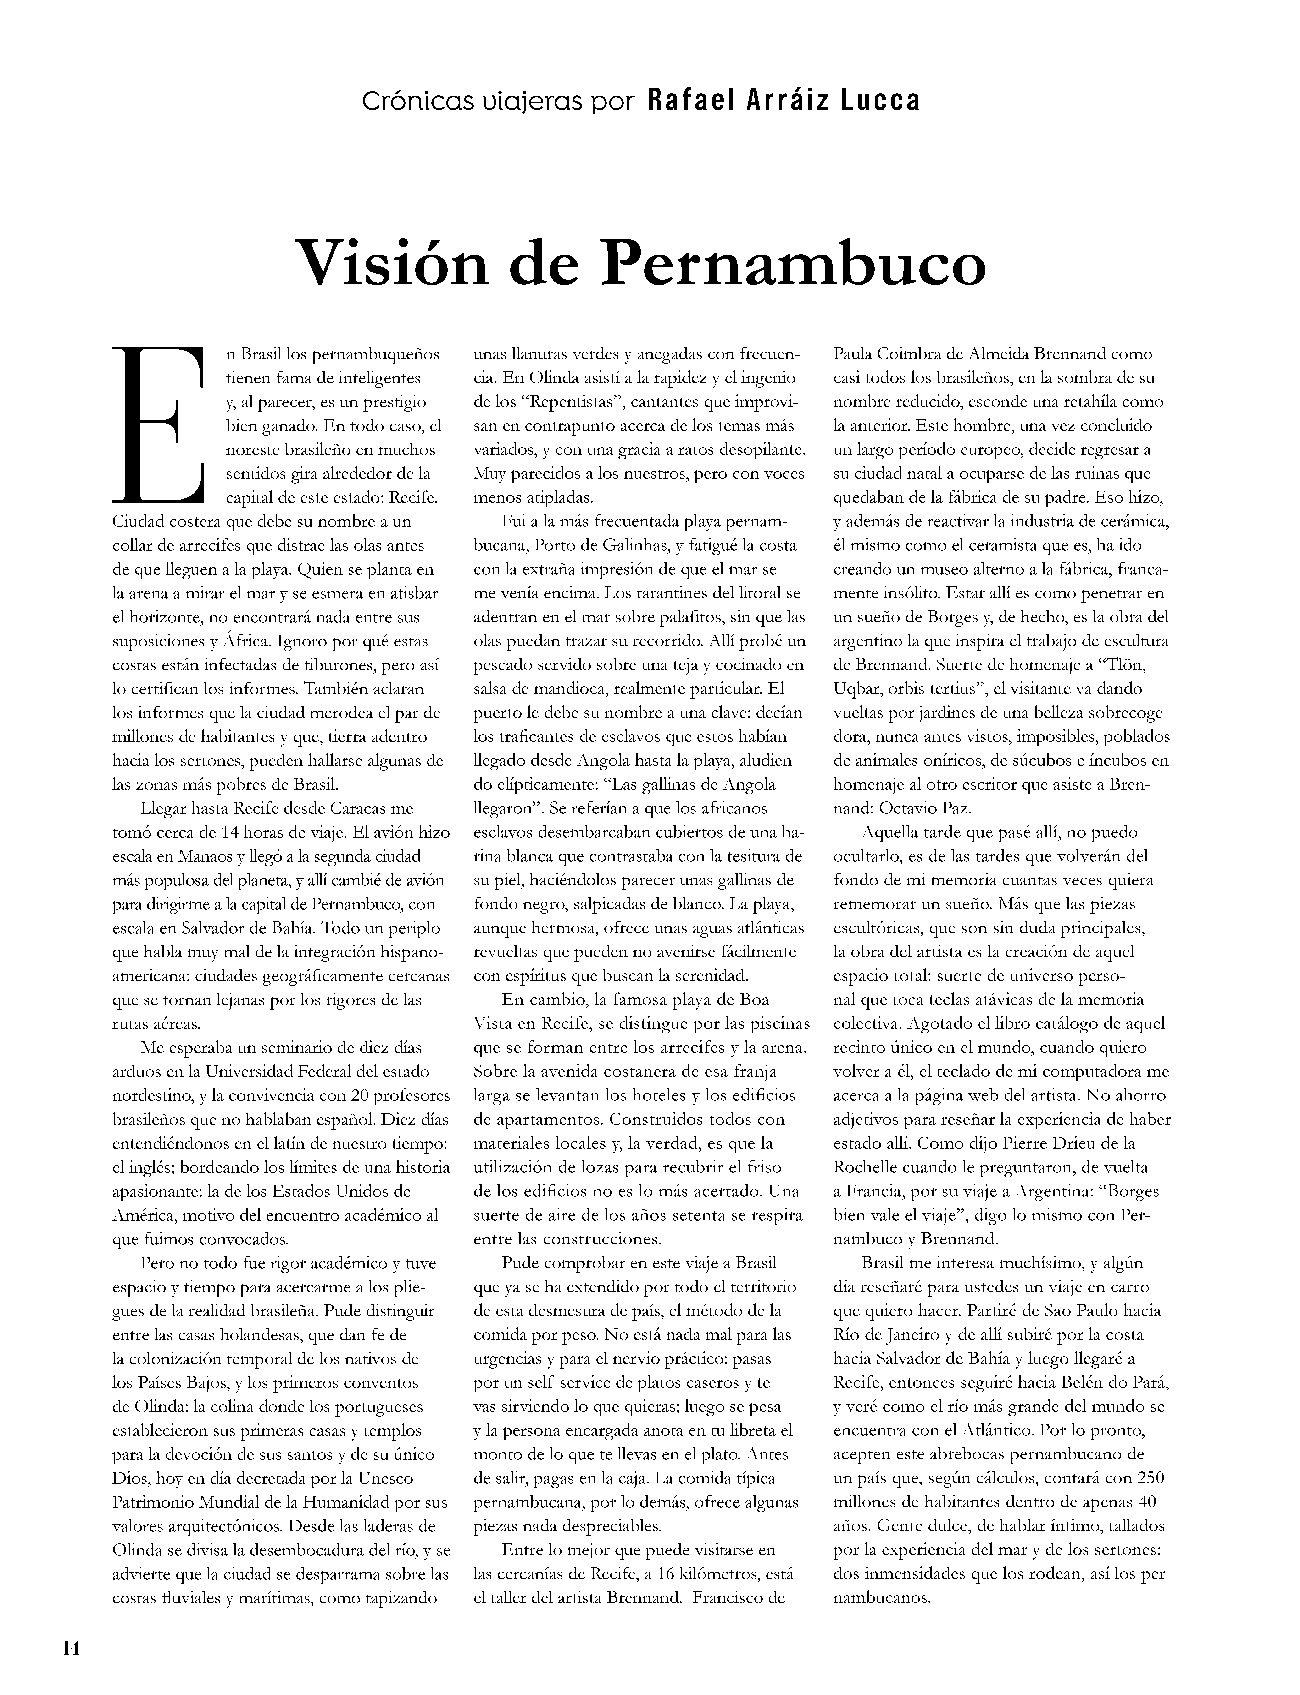 18-REV vision pernambuco